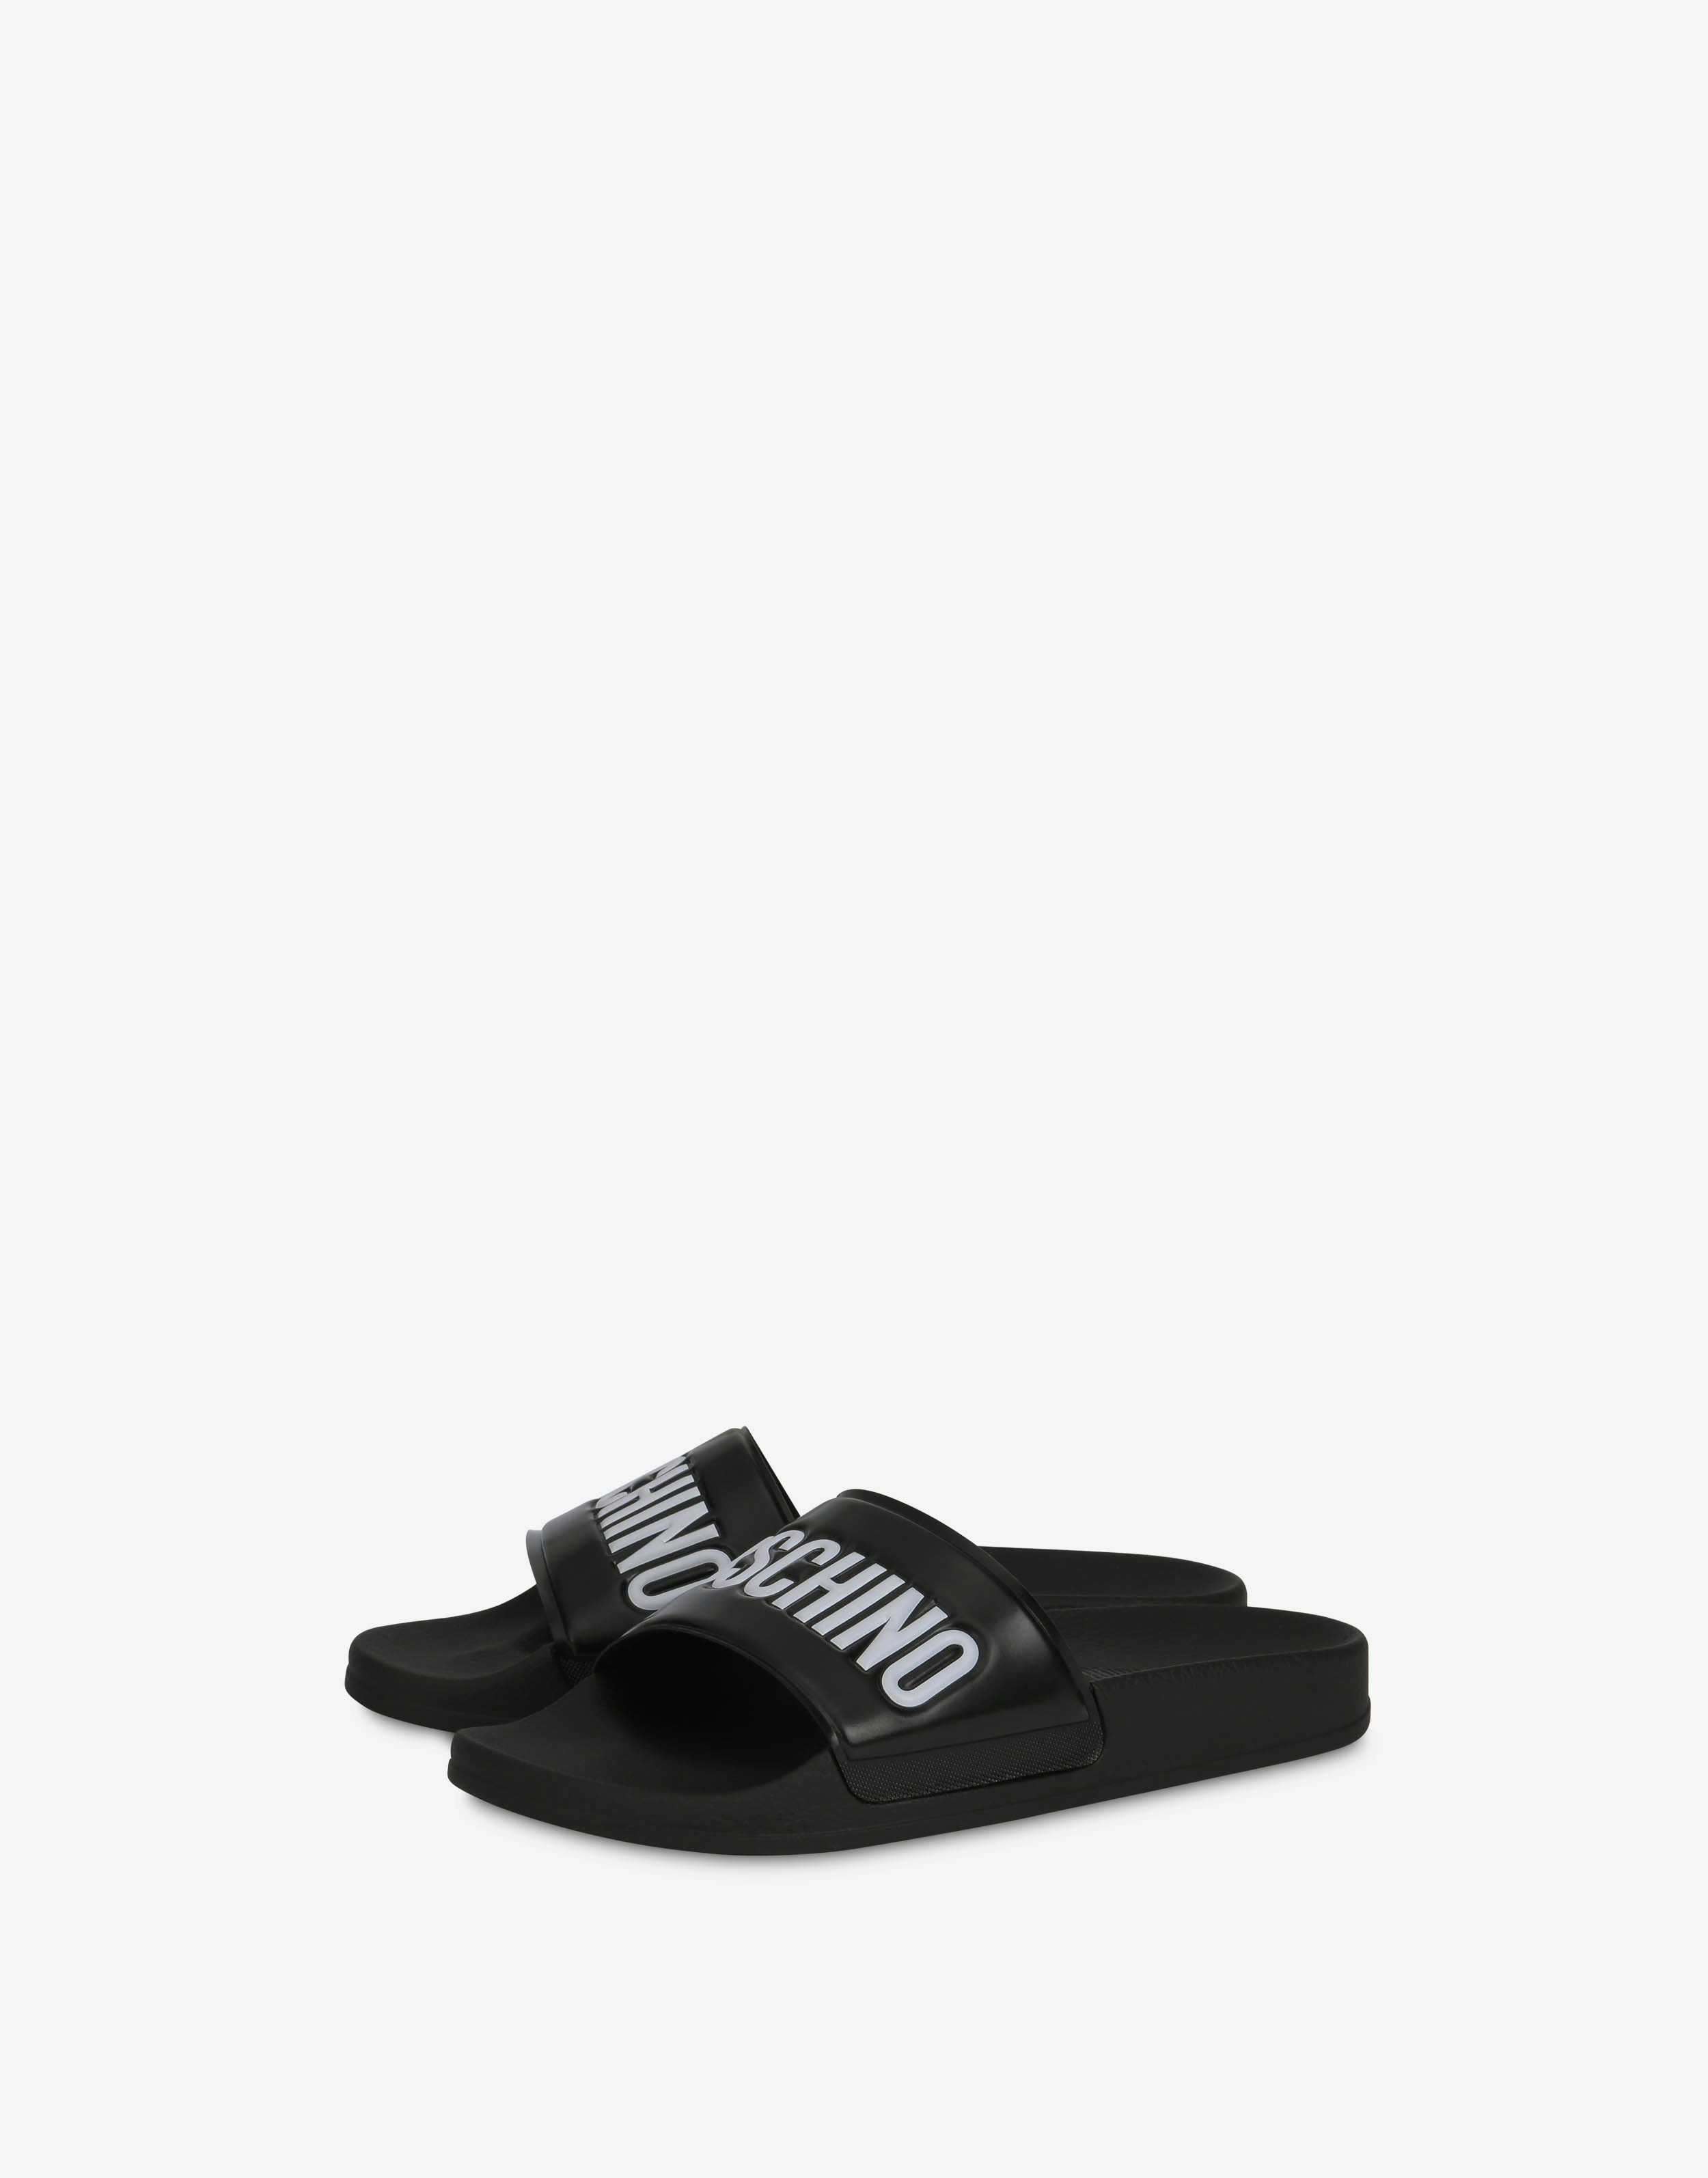 PVC slide sandals with logo